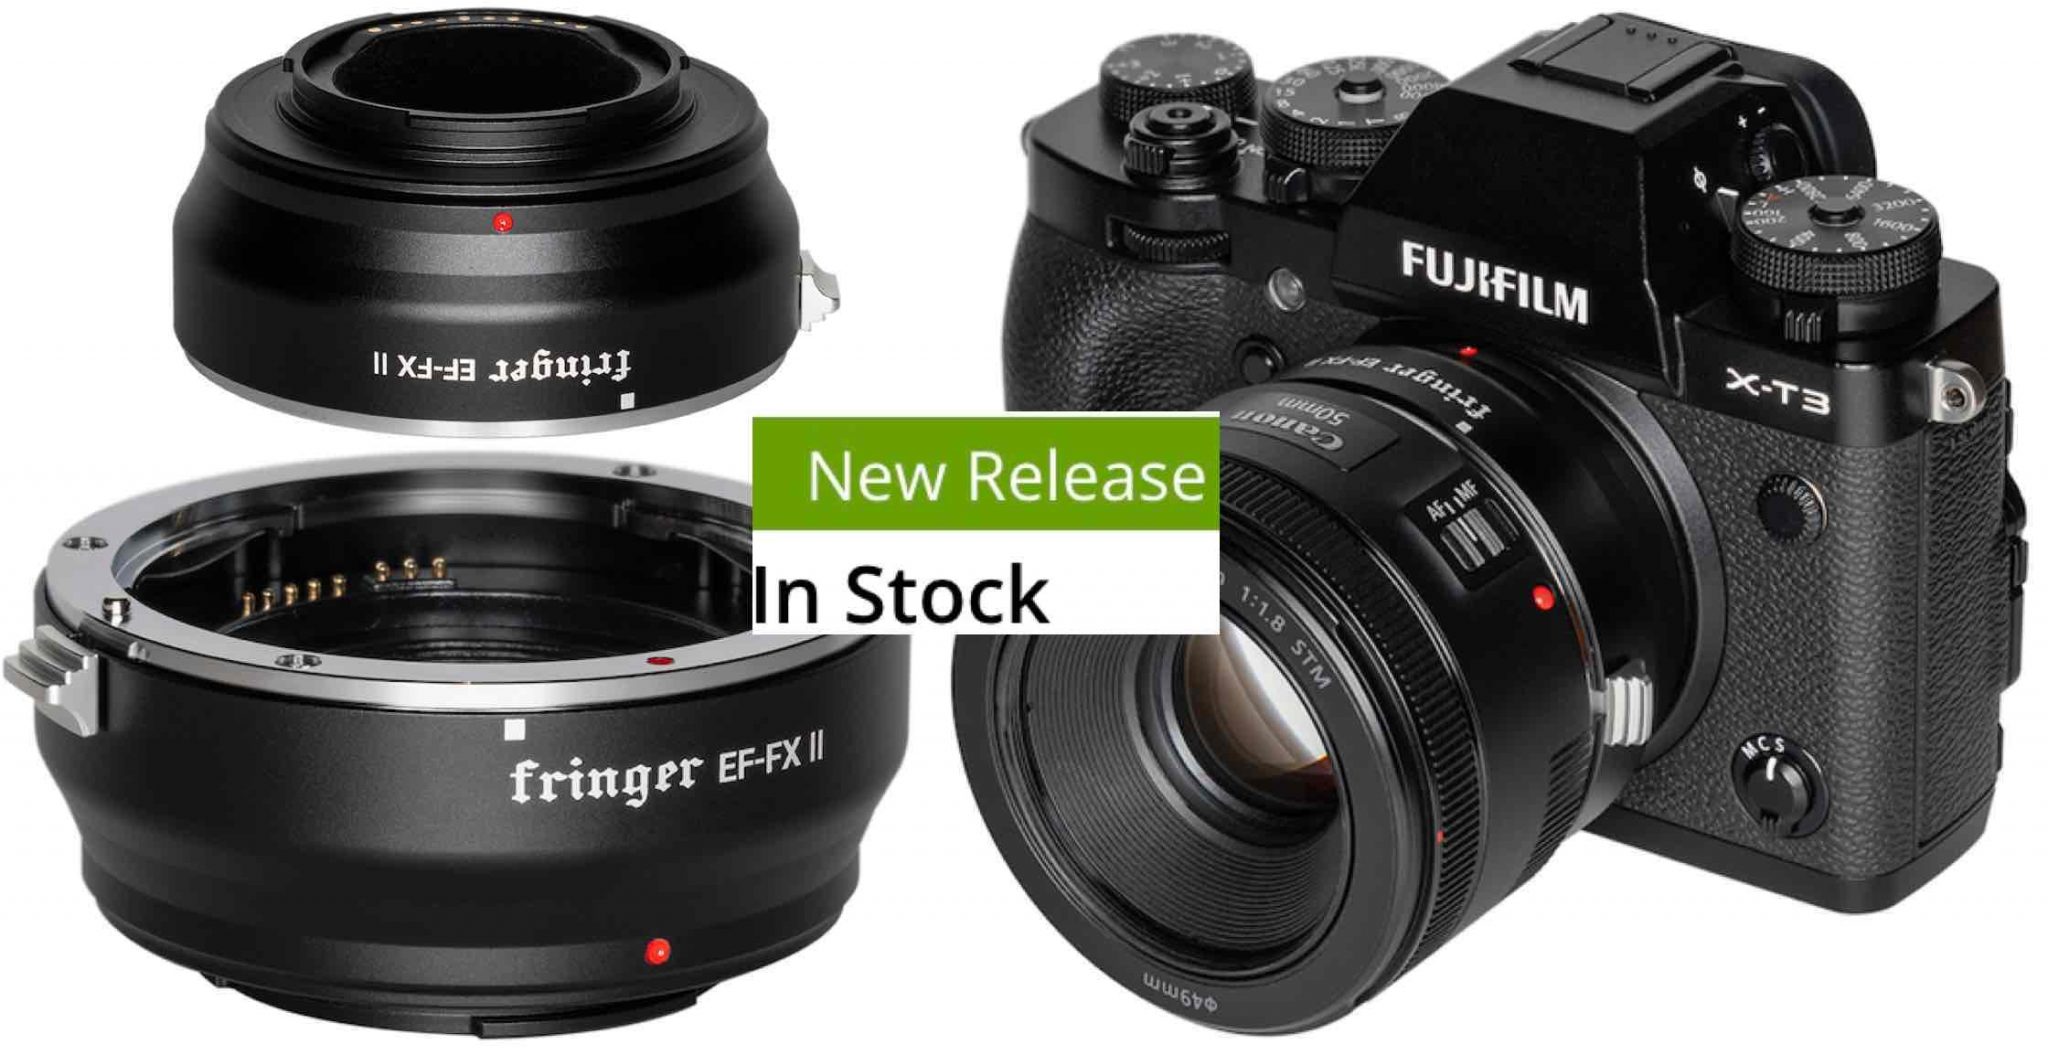 Fringer EF-FX II Smart Adapter Released - Fuji Rumors